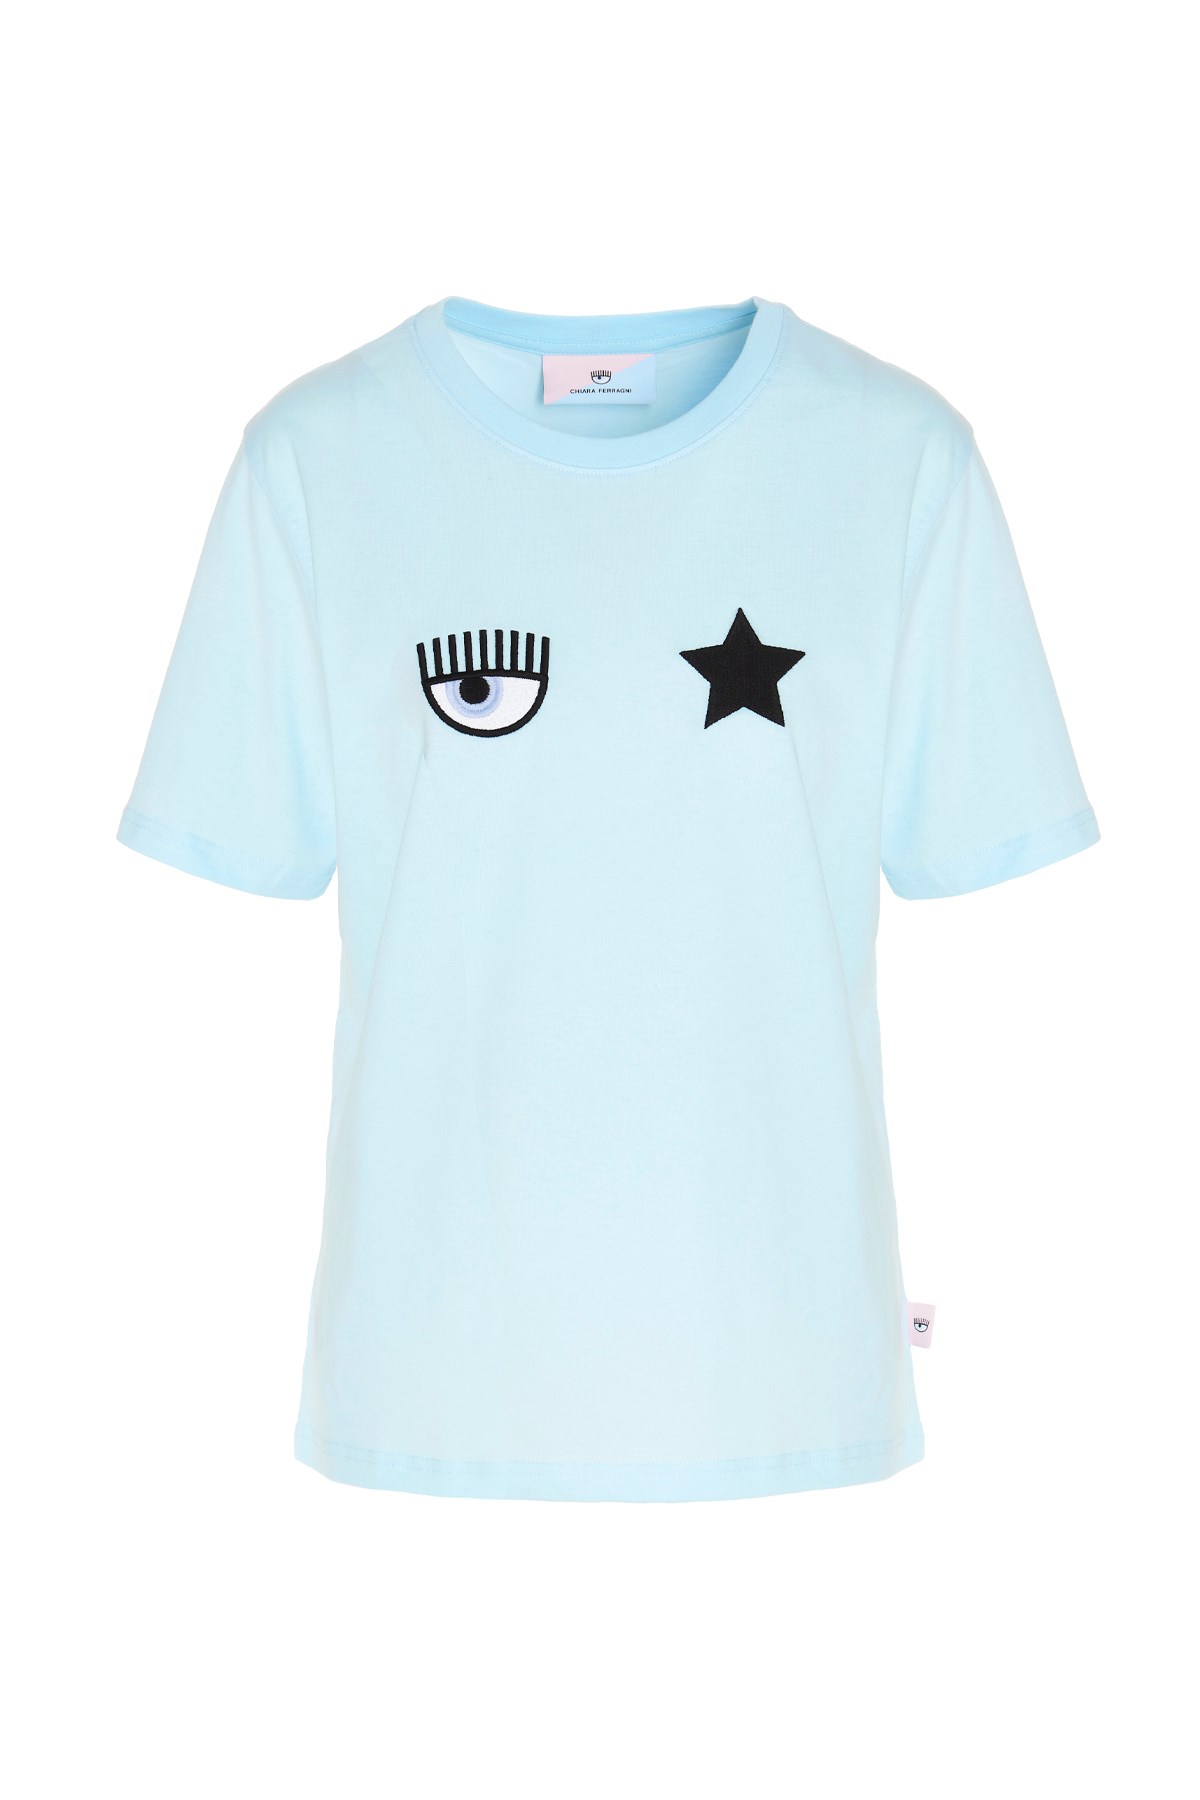 CHIARA FERRAGNI BRAND T-Shirt 'Eyestar'